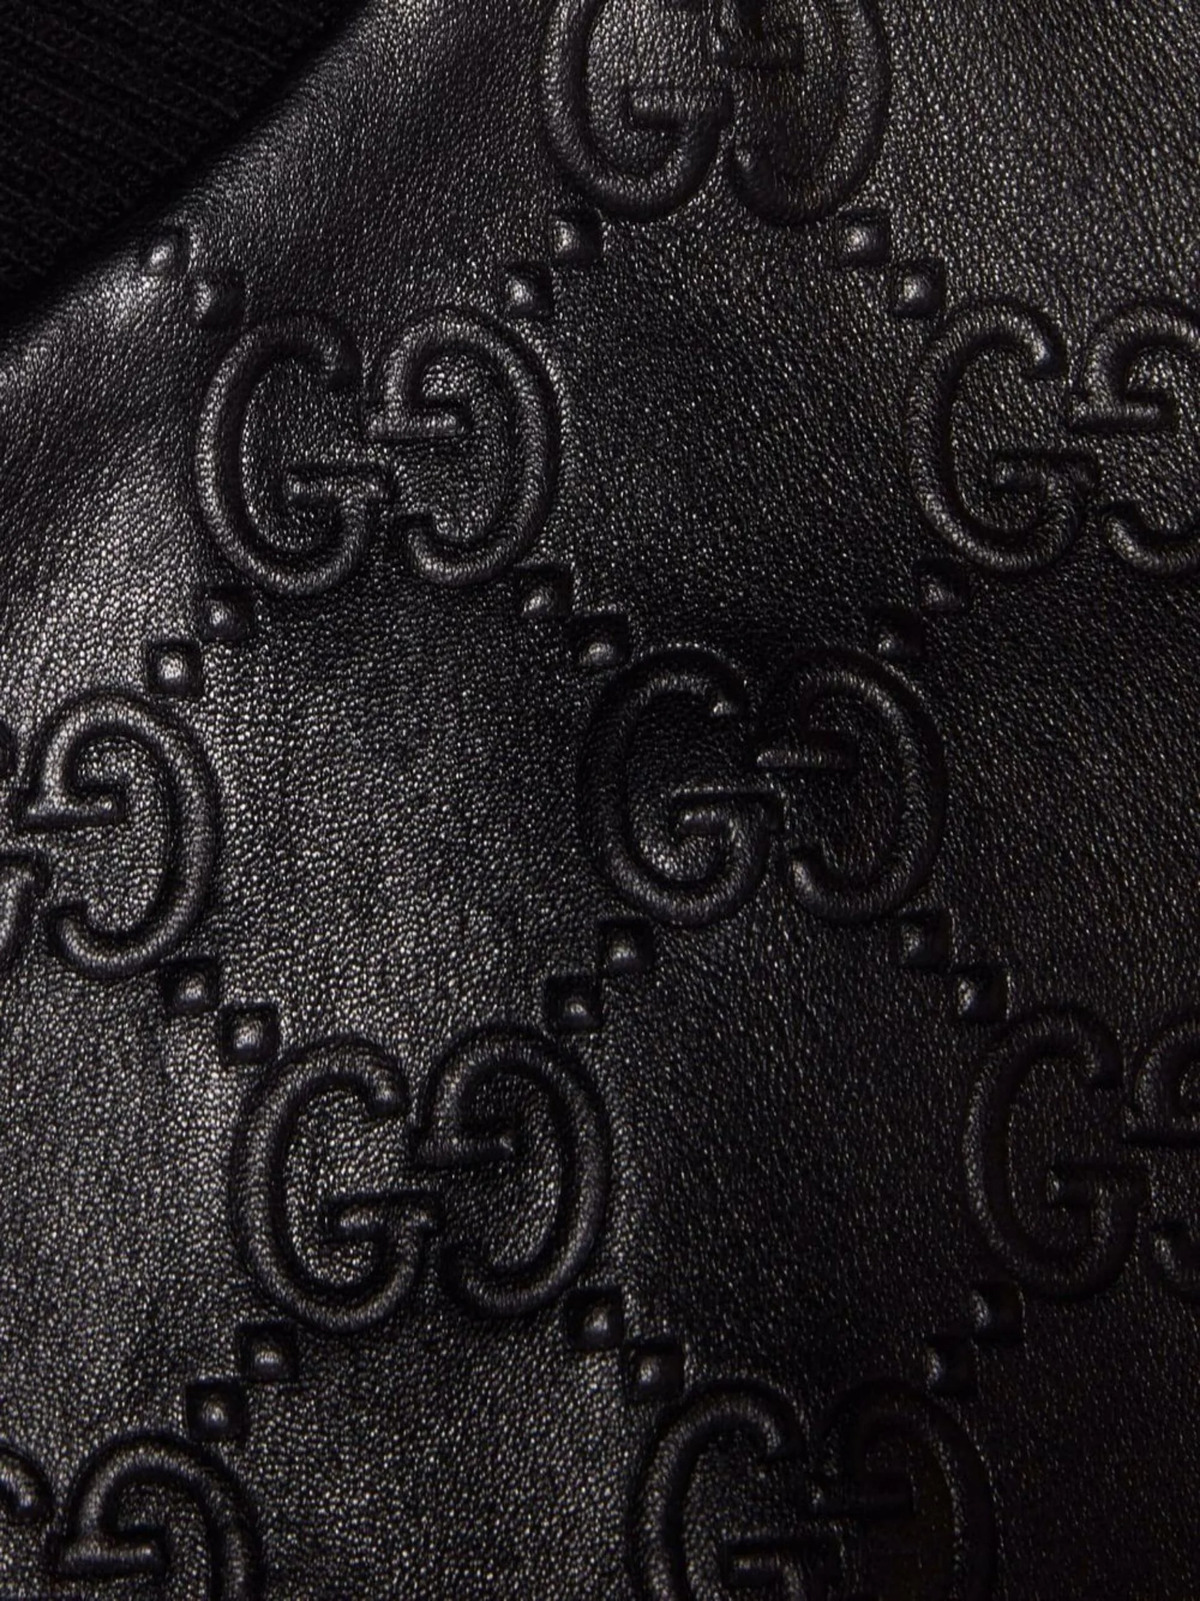 Gucci GG-debossed Leather Backpack in Black for Men